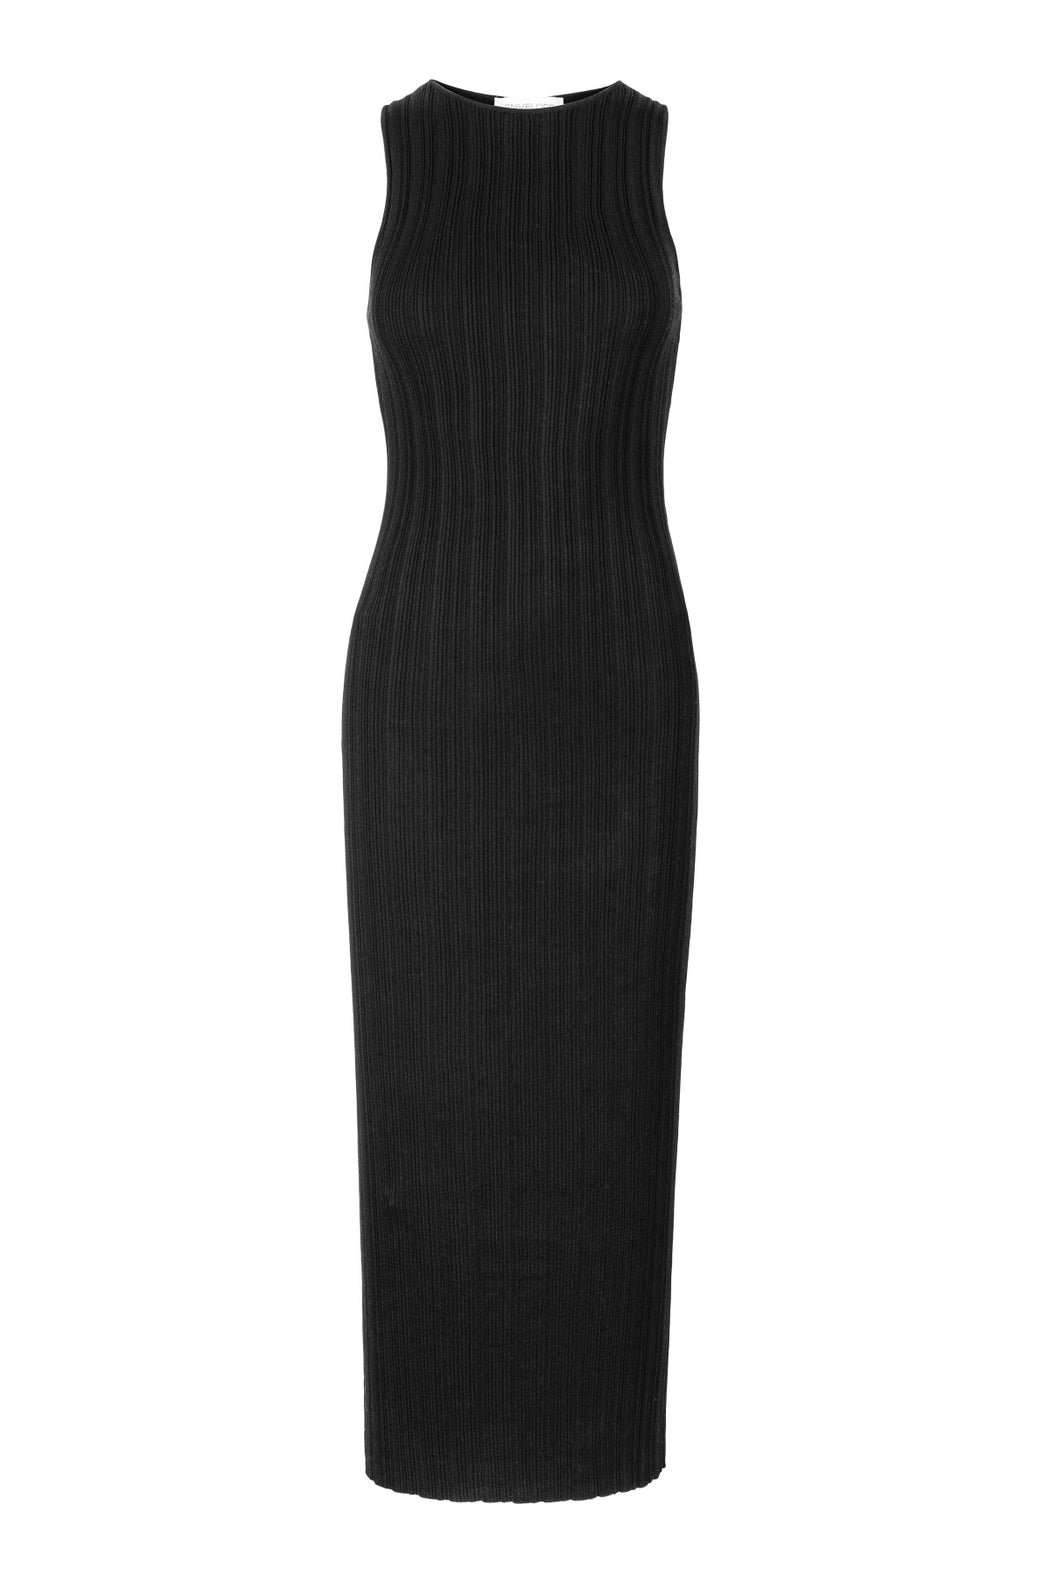 Envelope1976 Malibu dress, Black Dress Black